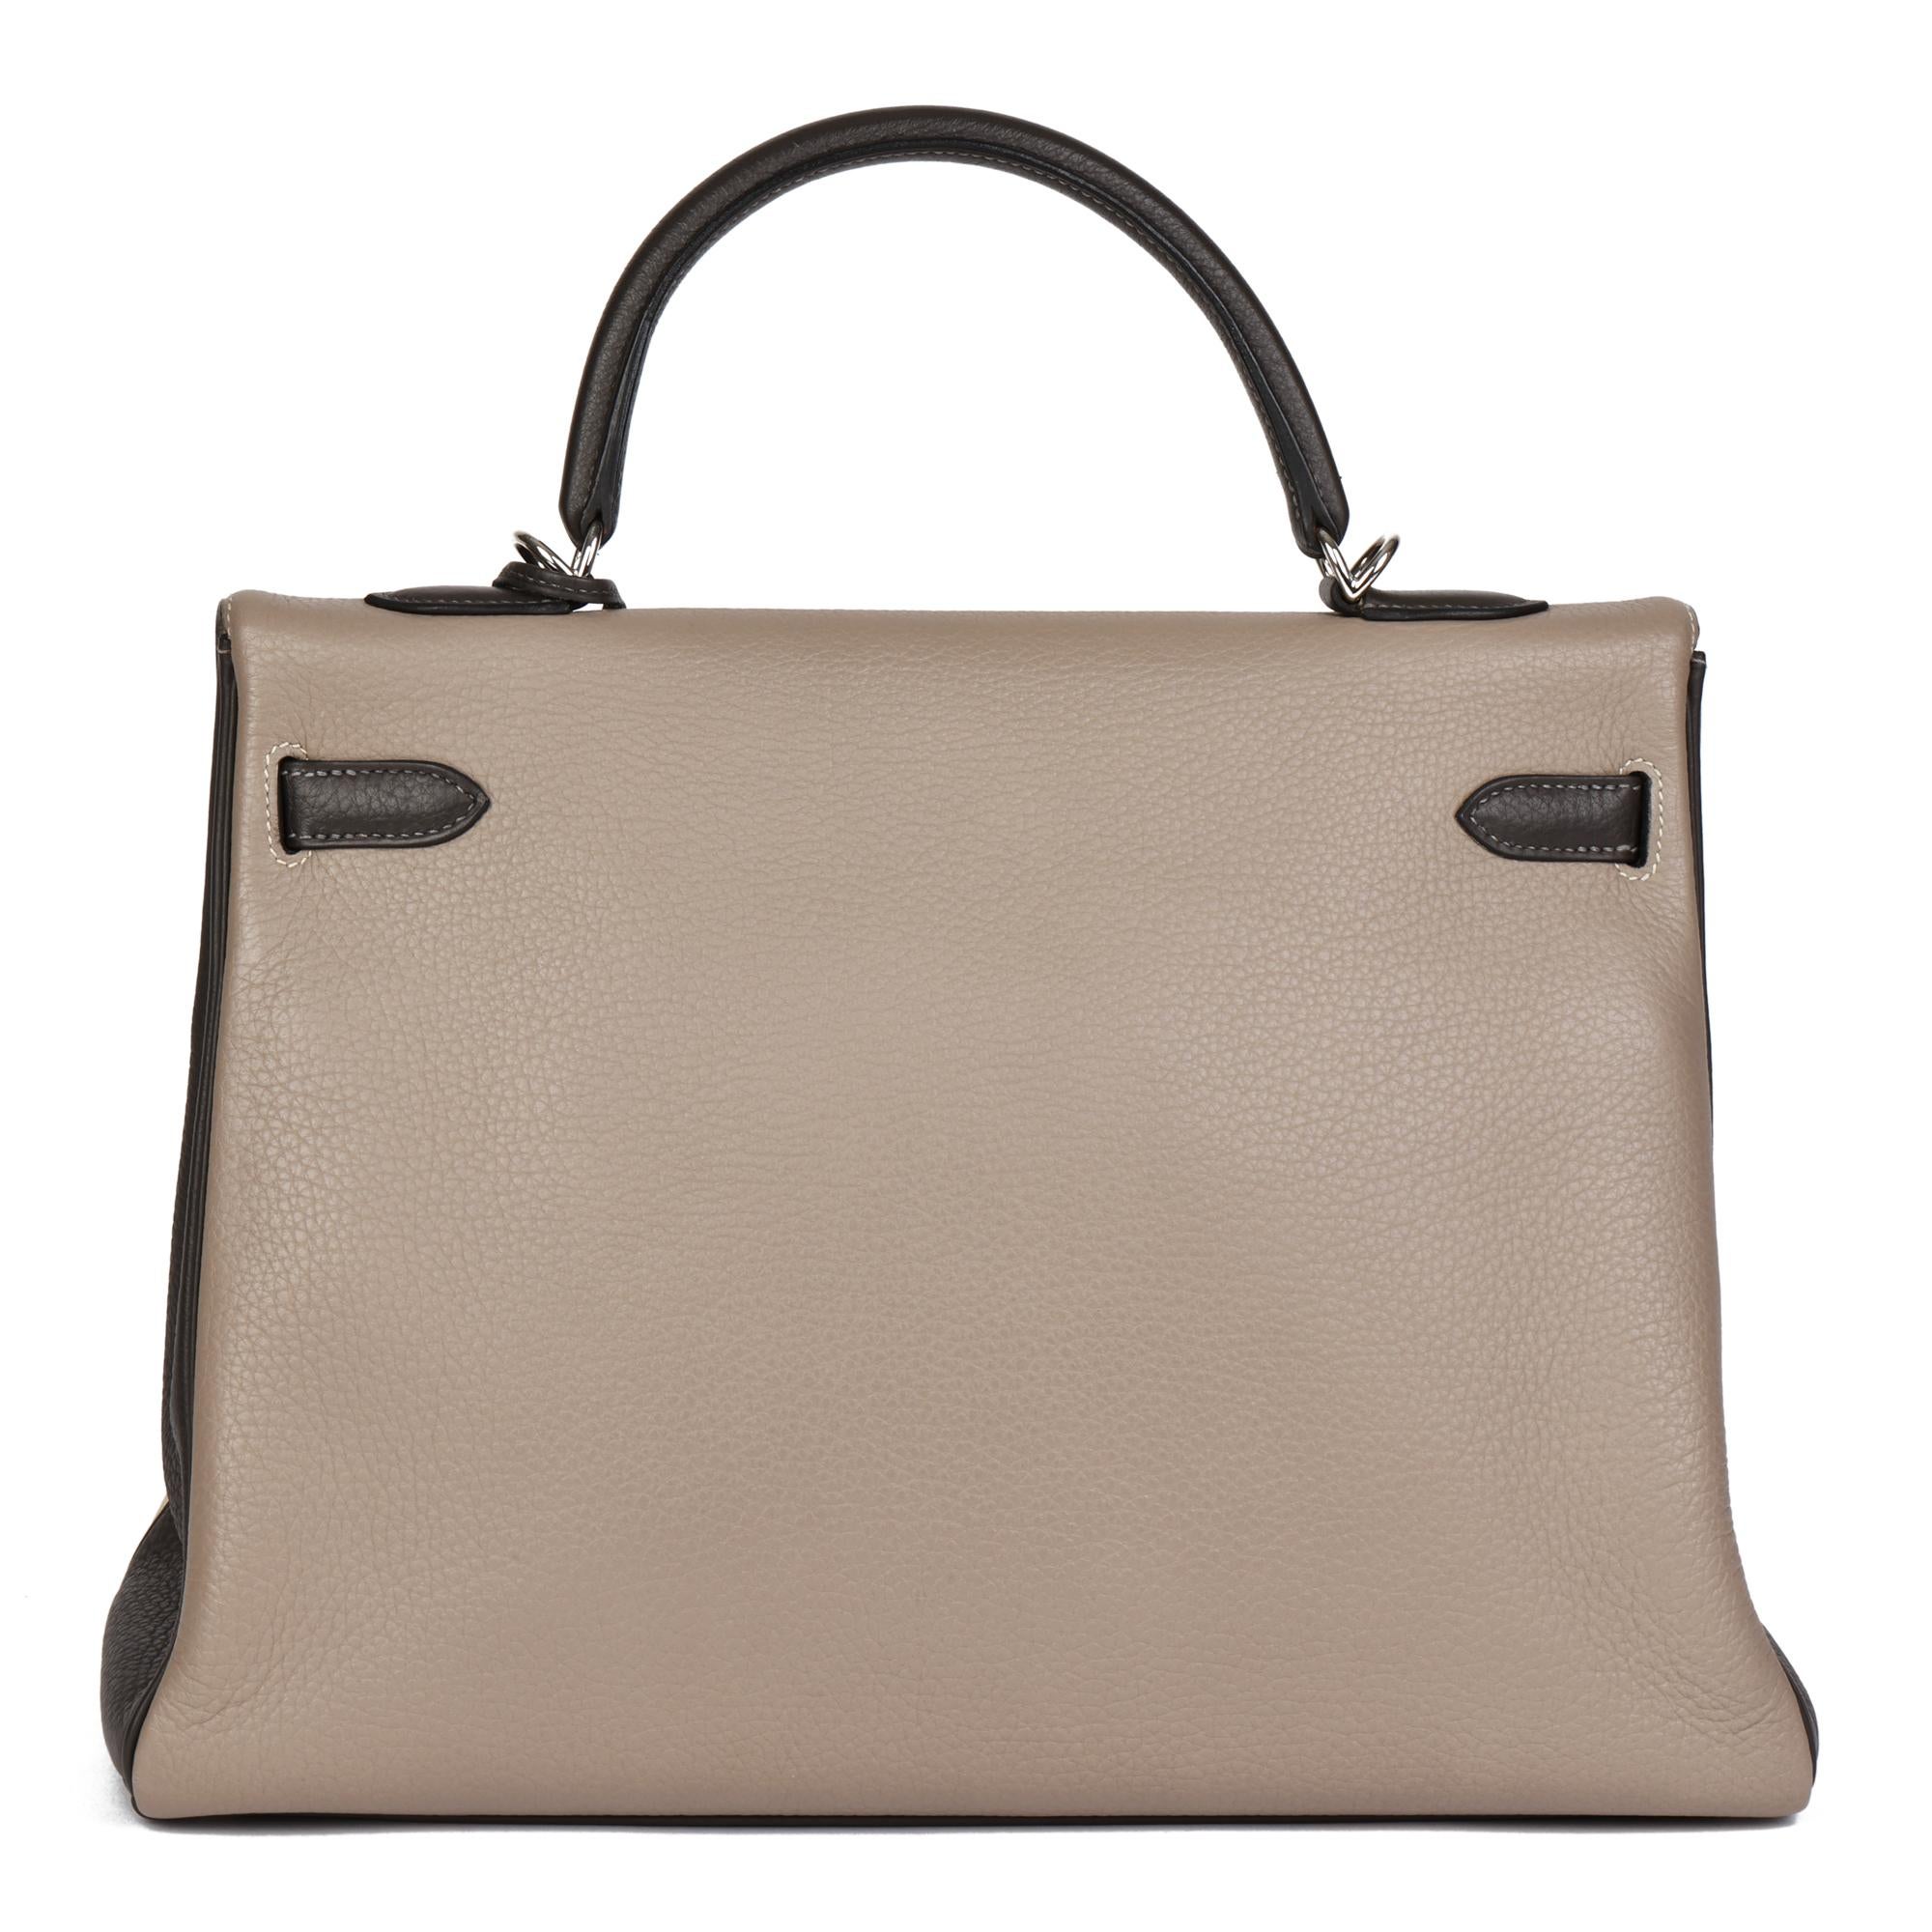 35cm Genuine Leather Shopper Tote Handbag Top Handle Satchel Etoupe